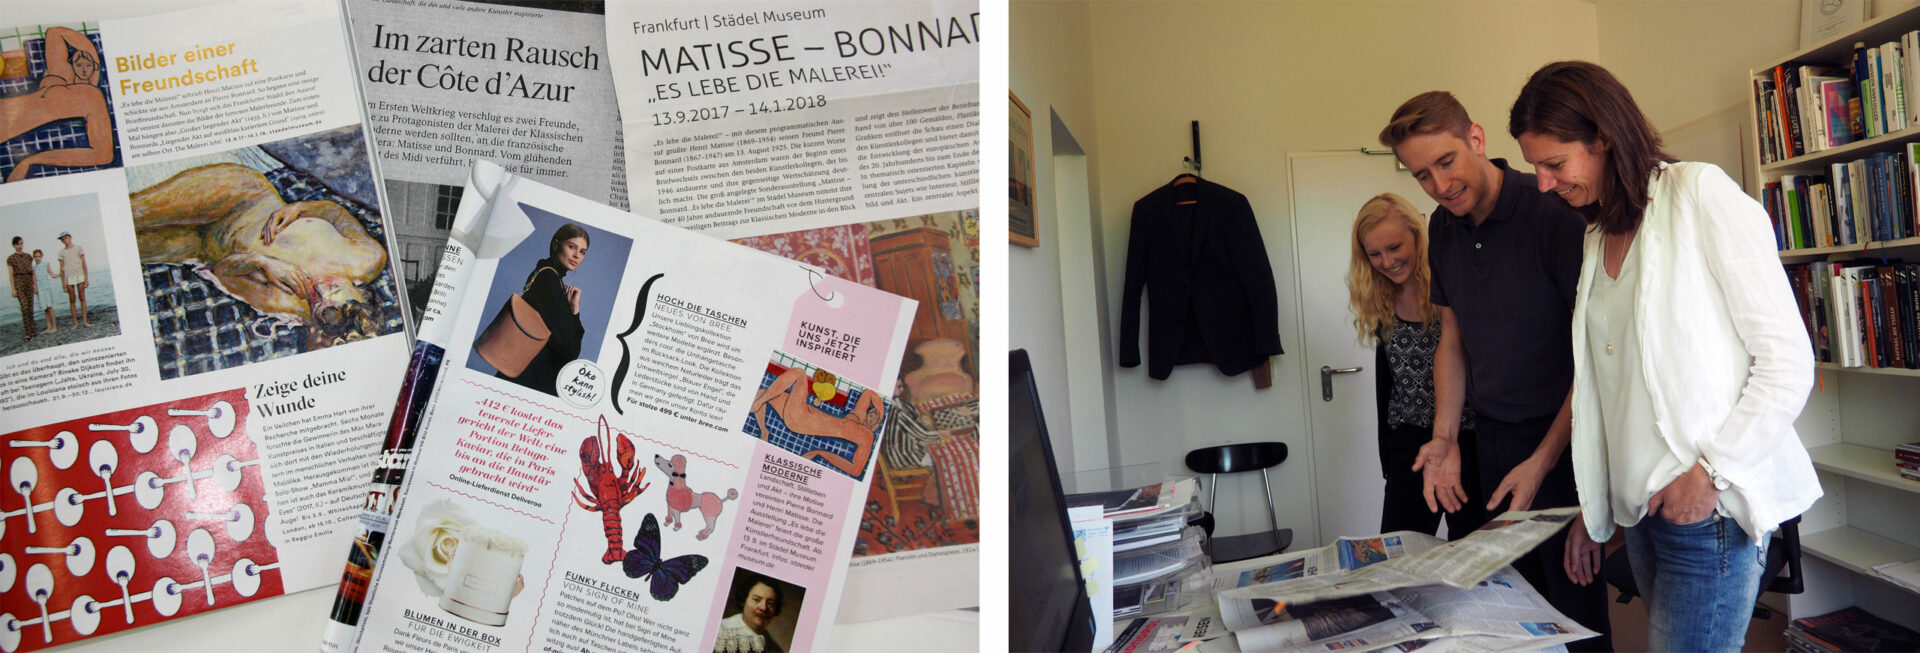 Matisse-Bonnard-PresseIII